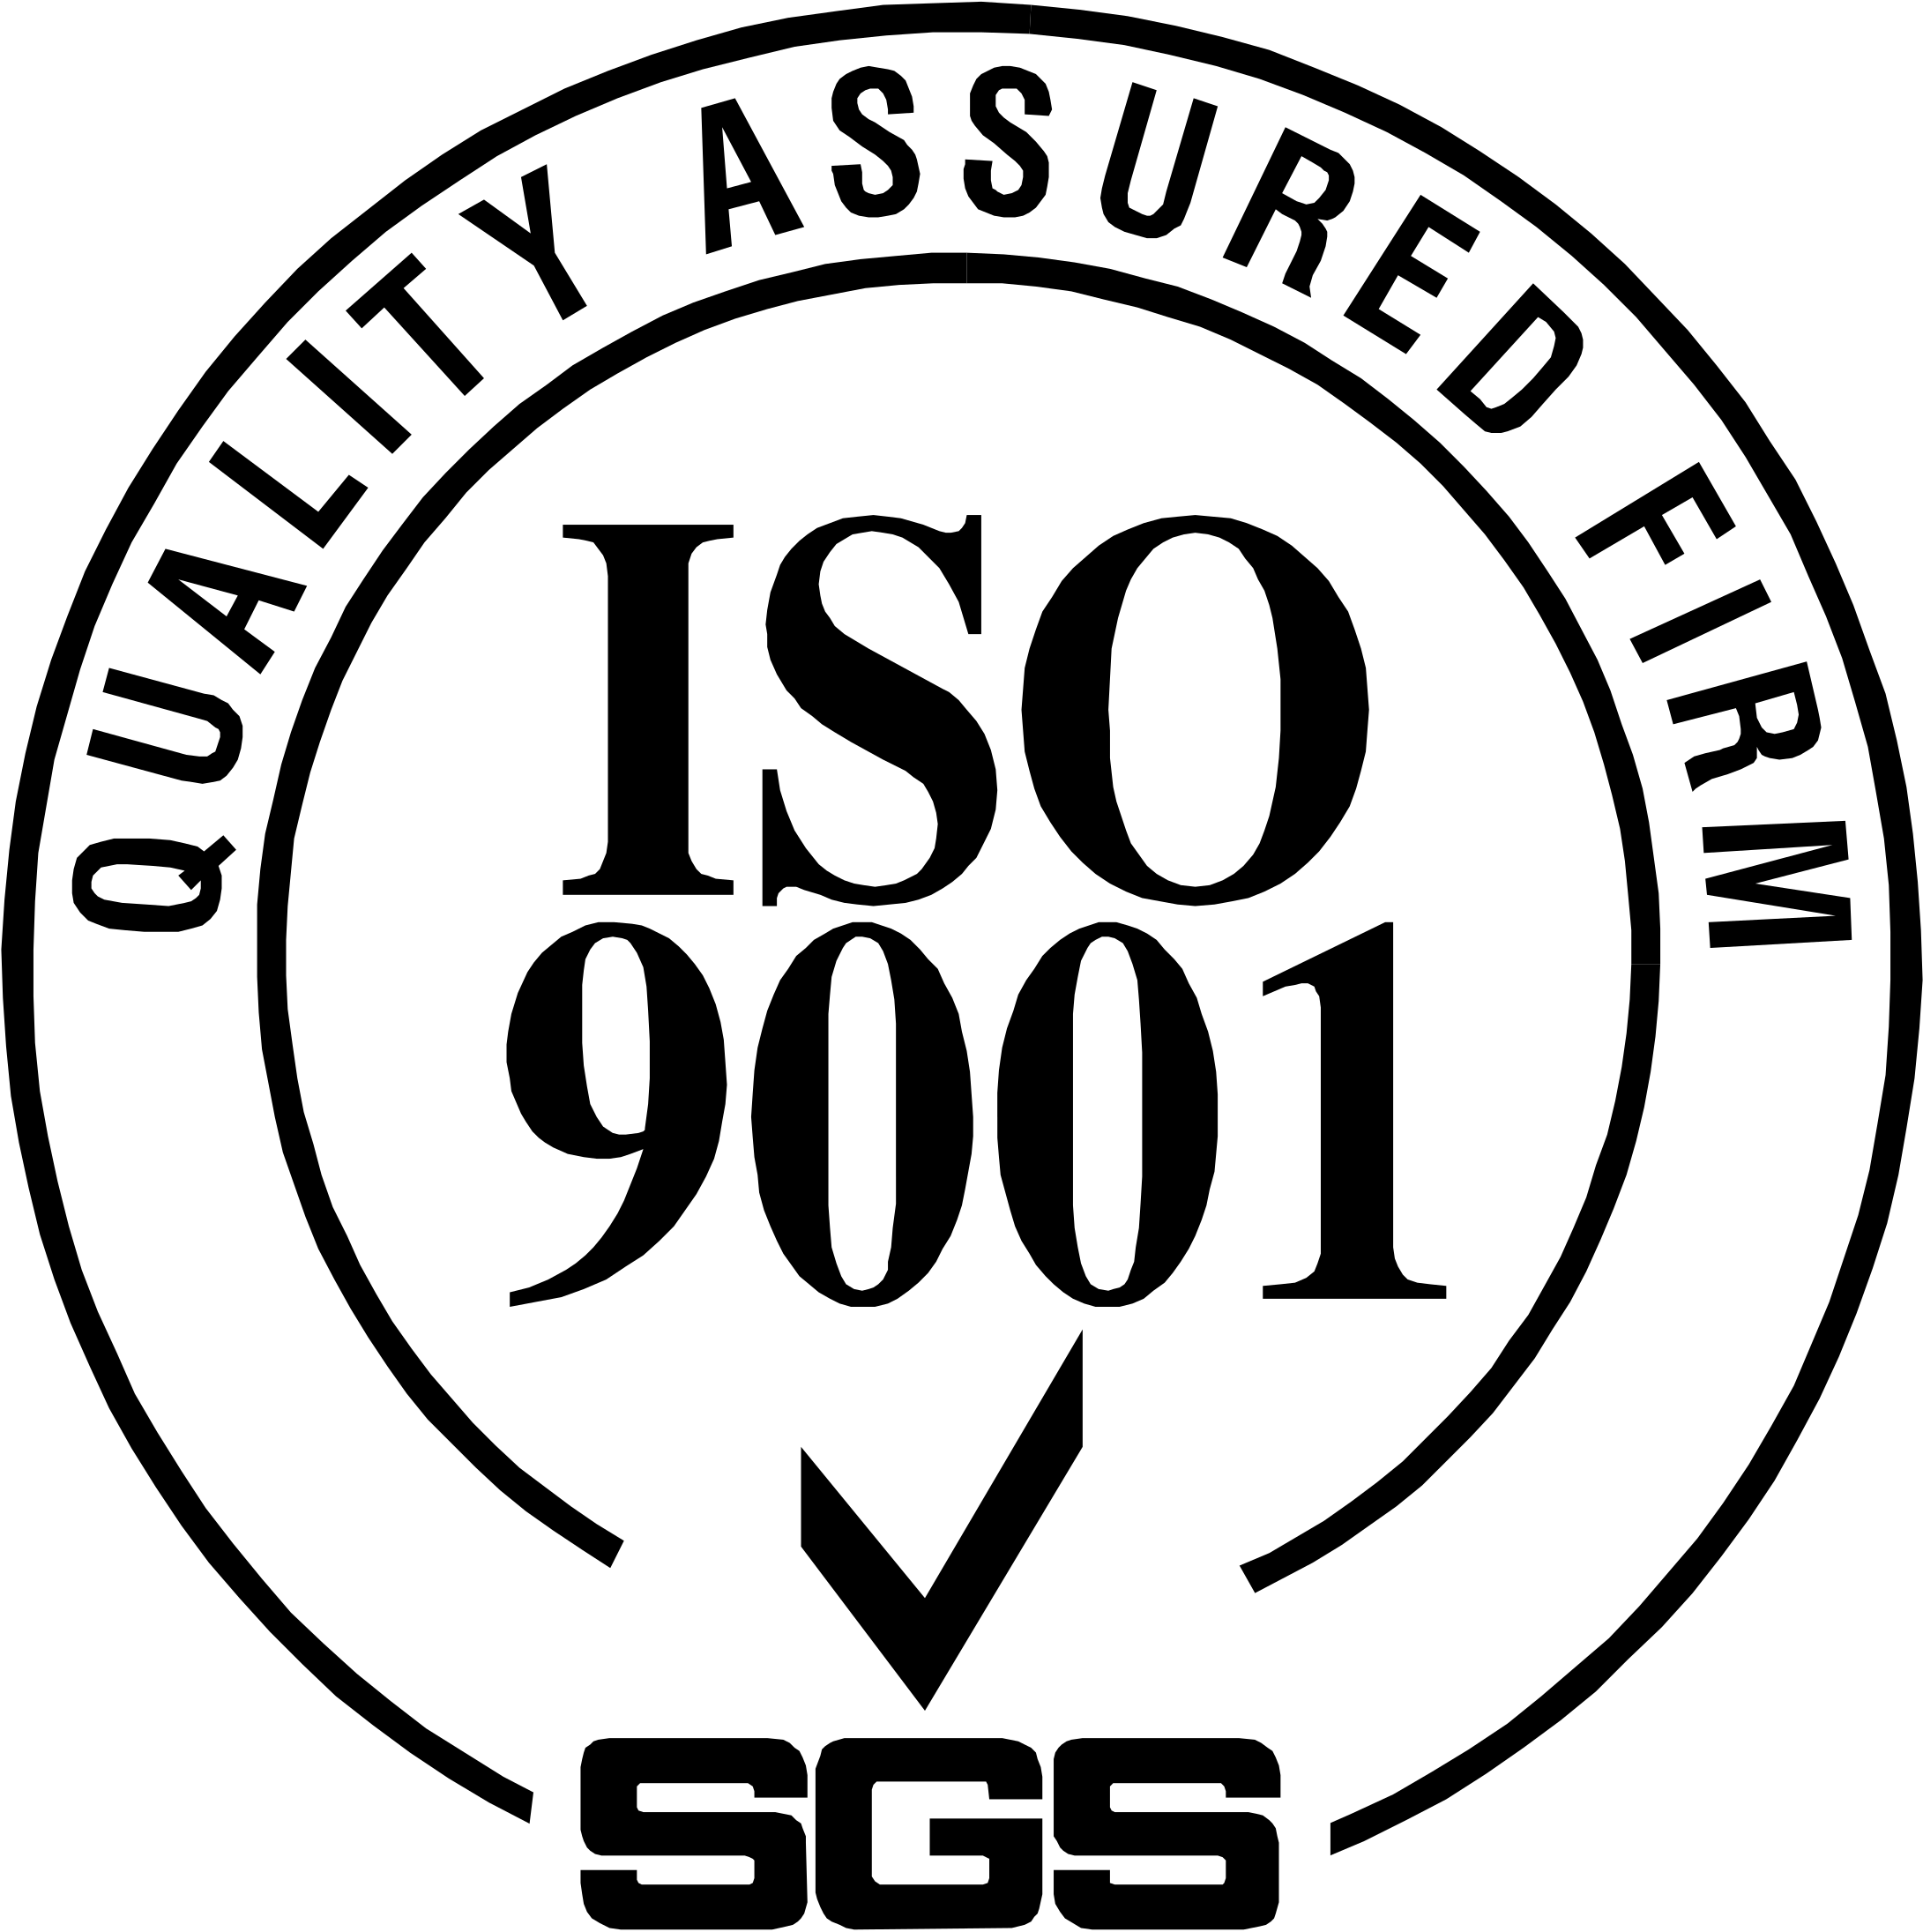 iso9002 logo